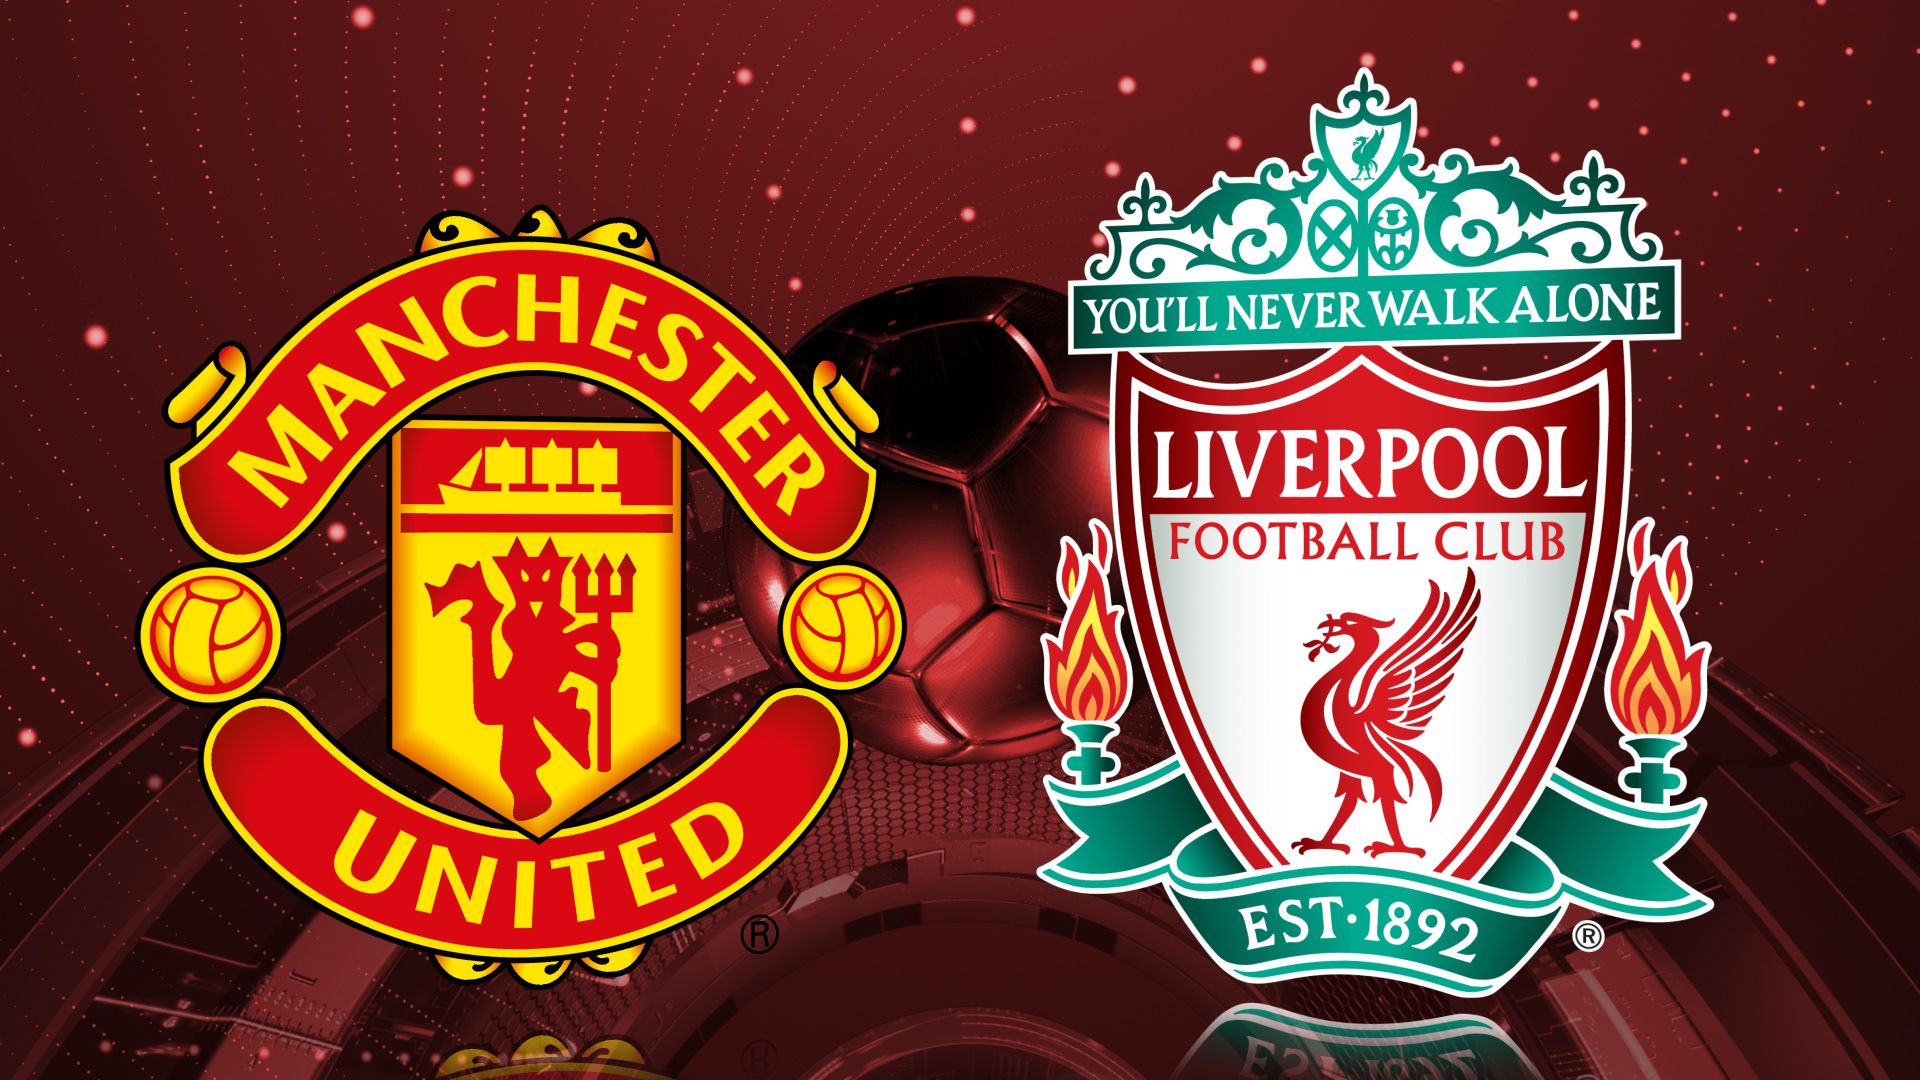 Liverpool FC - Homepage1920 x 1080